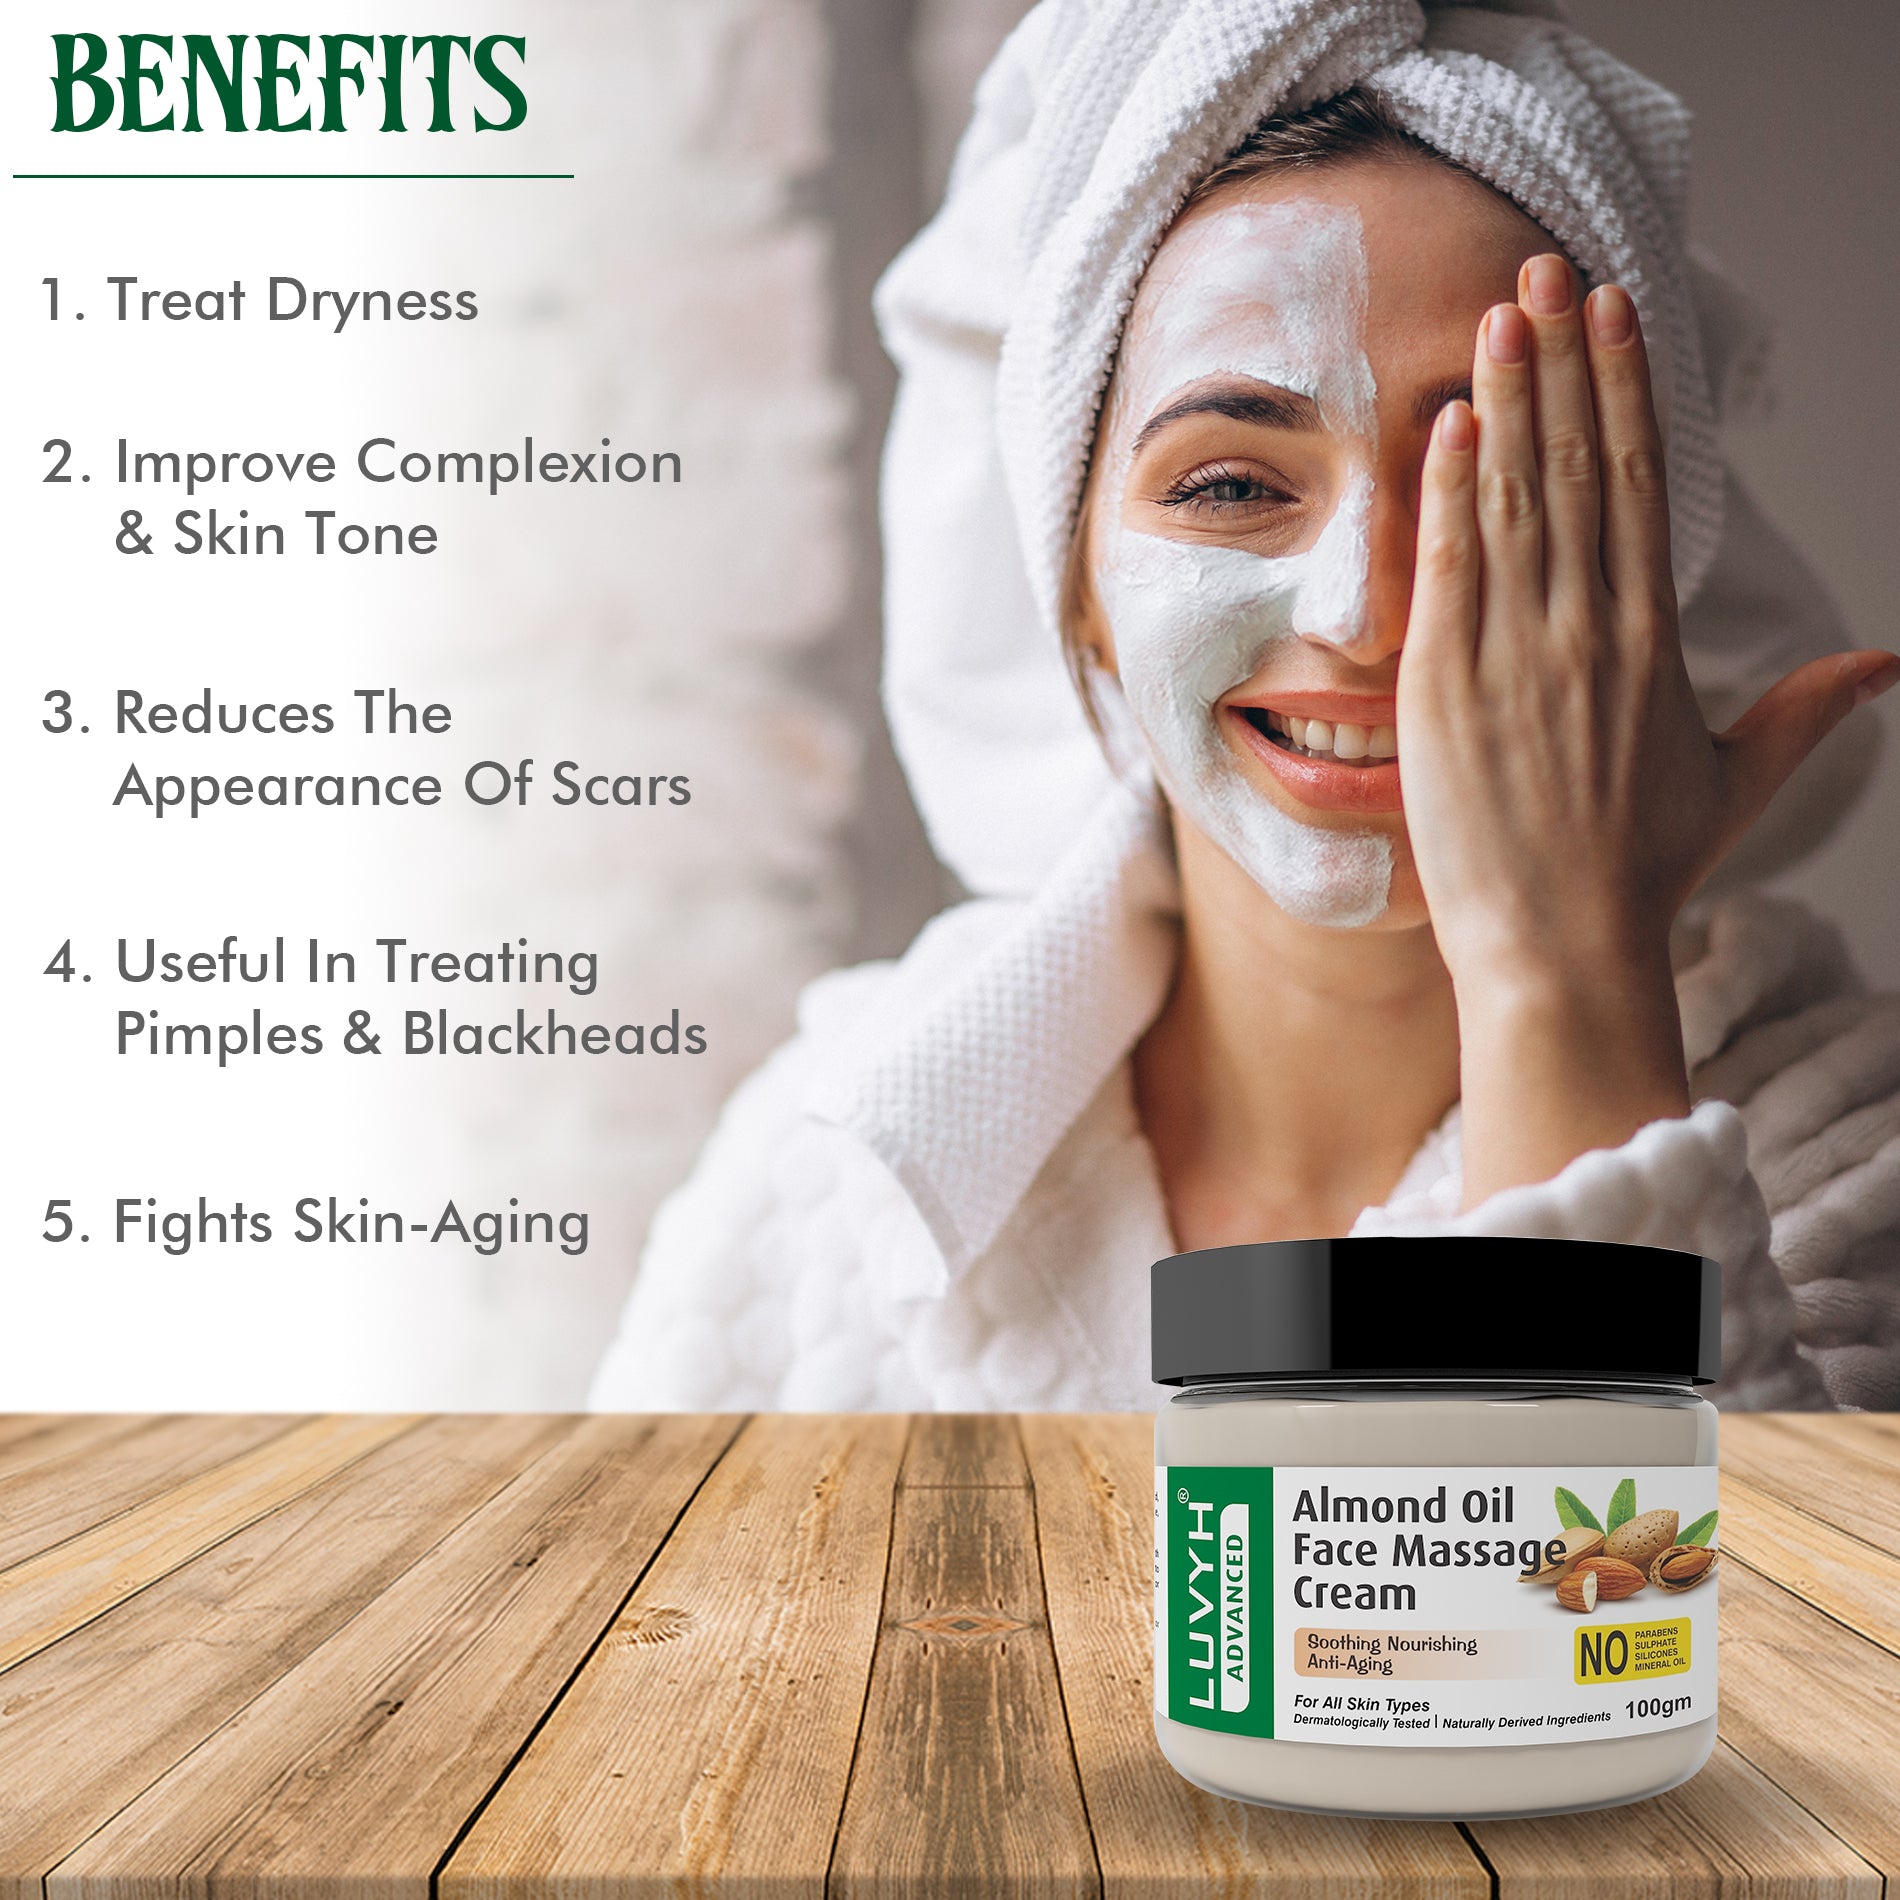 Benefits of Almond Oil Face Massage Cream